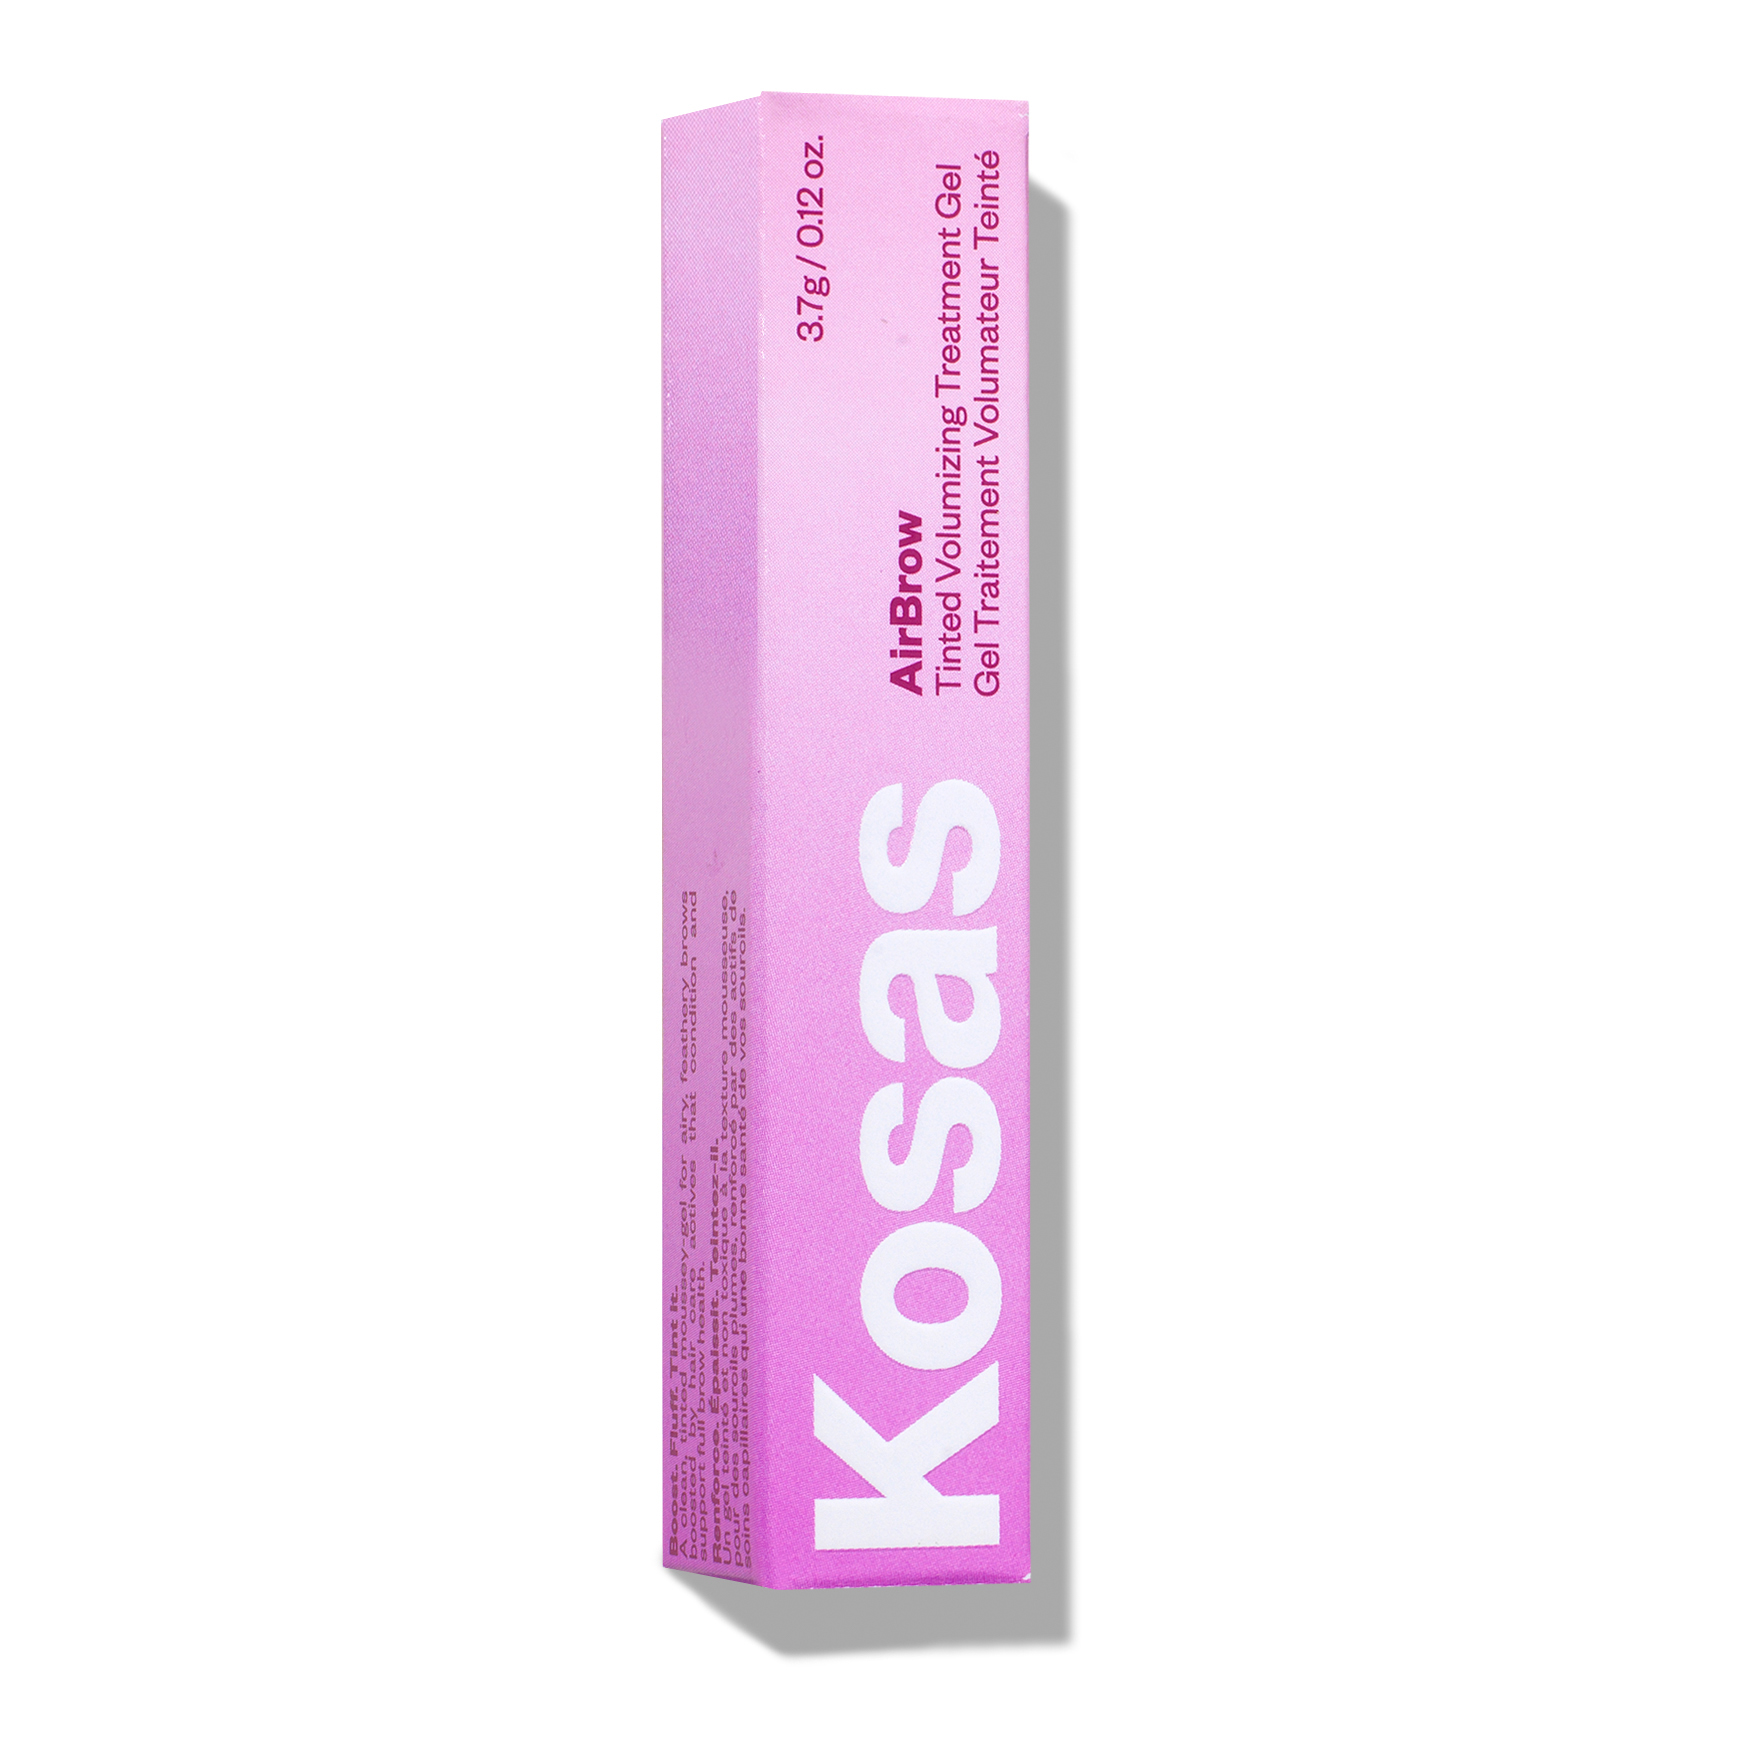 Kosas Air Brow Tinted Volumizing Treatment Gel